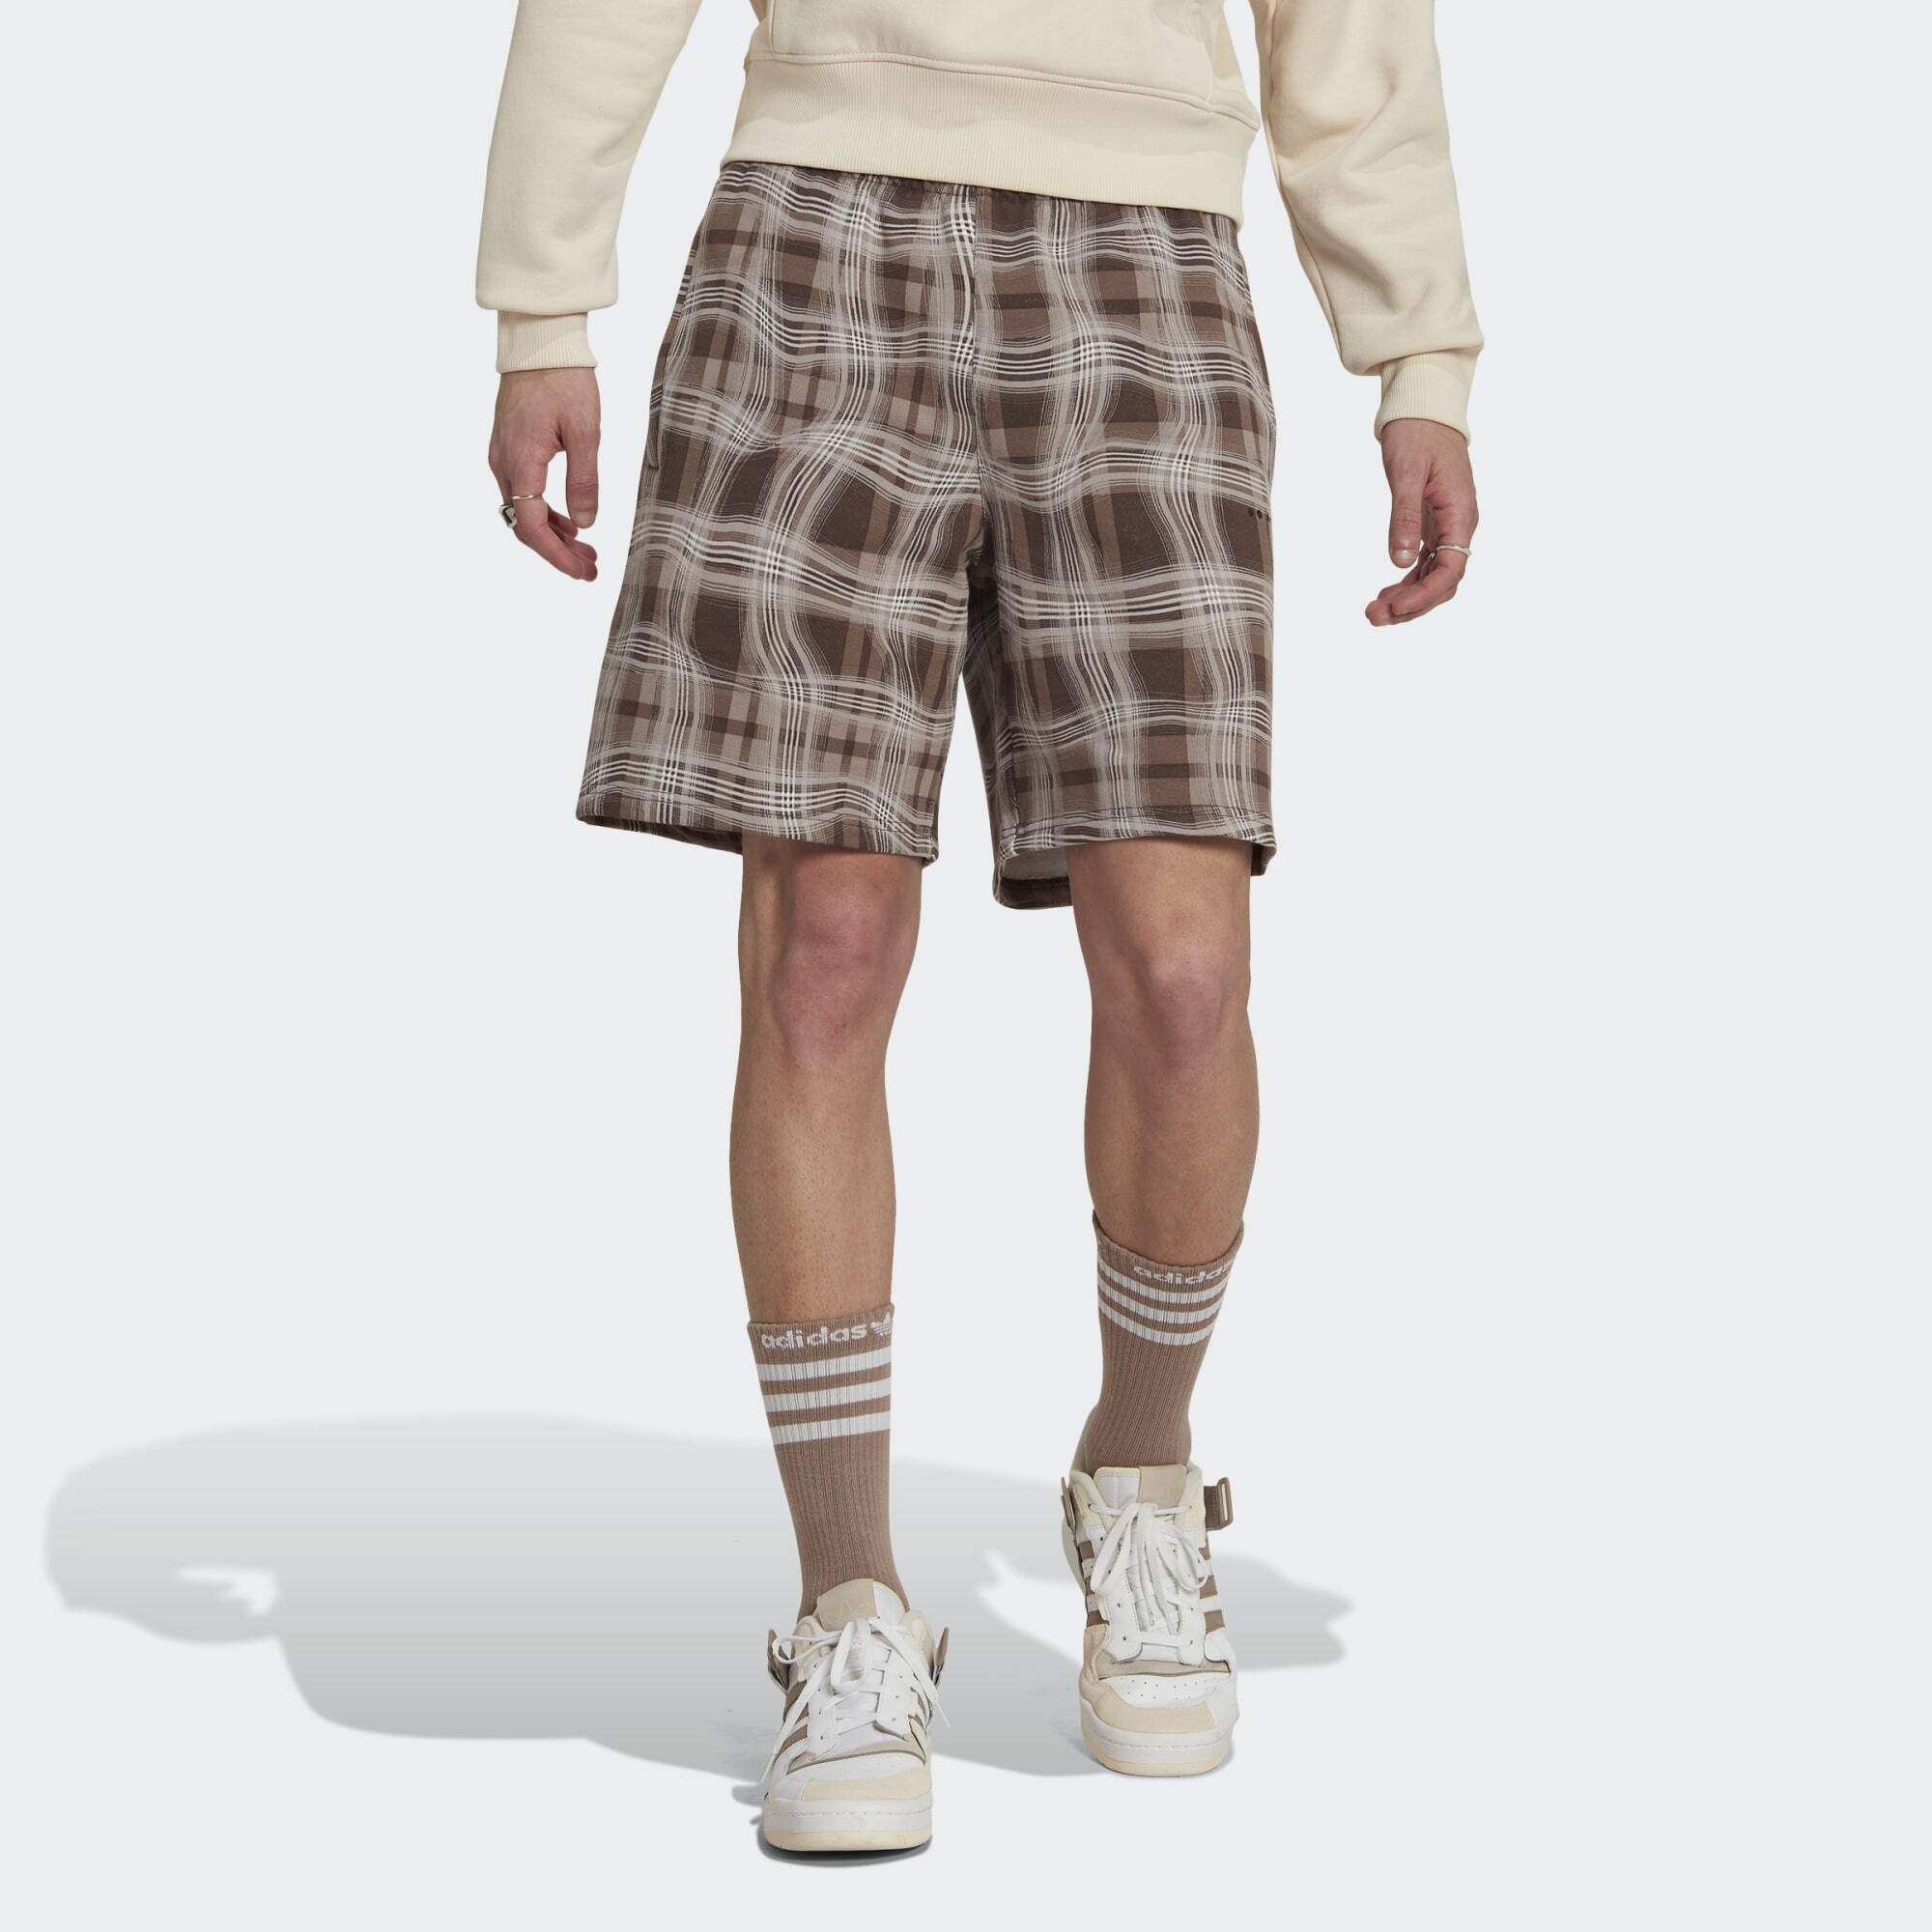 adidas Originals Reveal Allover Print Shorts (9000122340_1608)